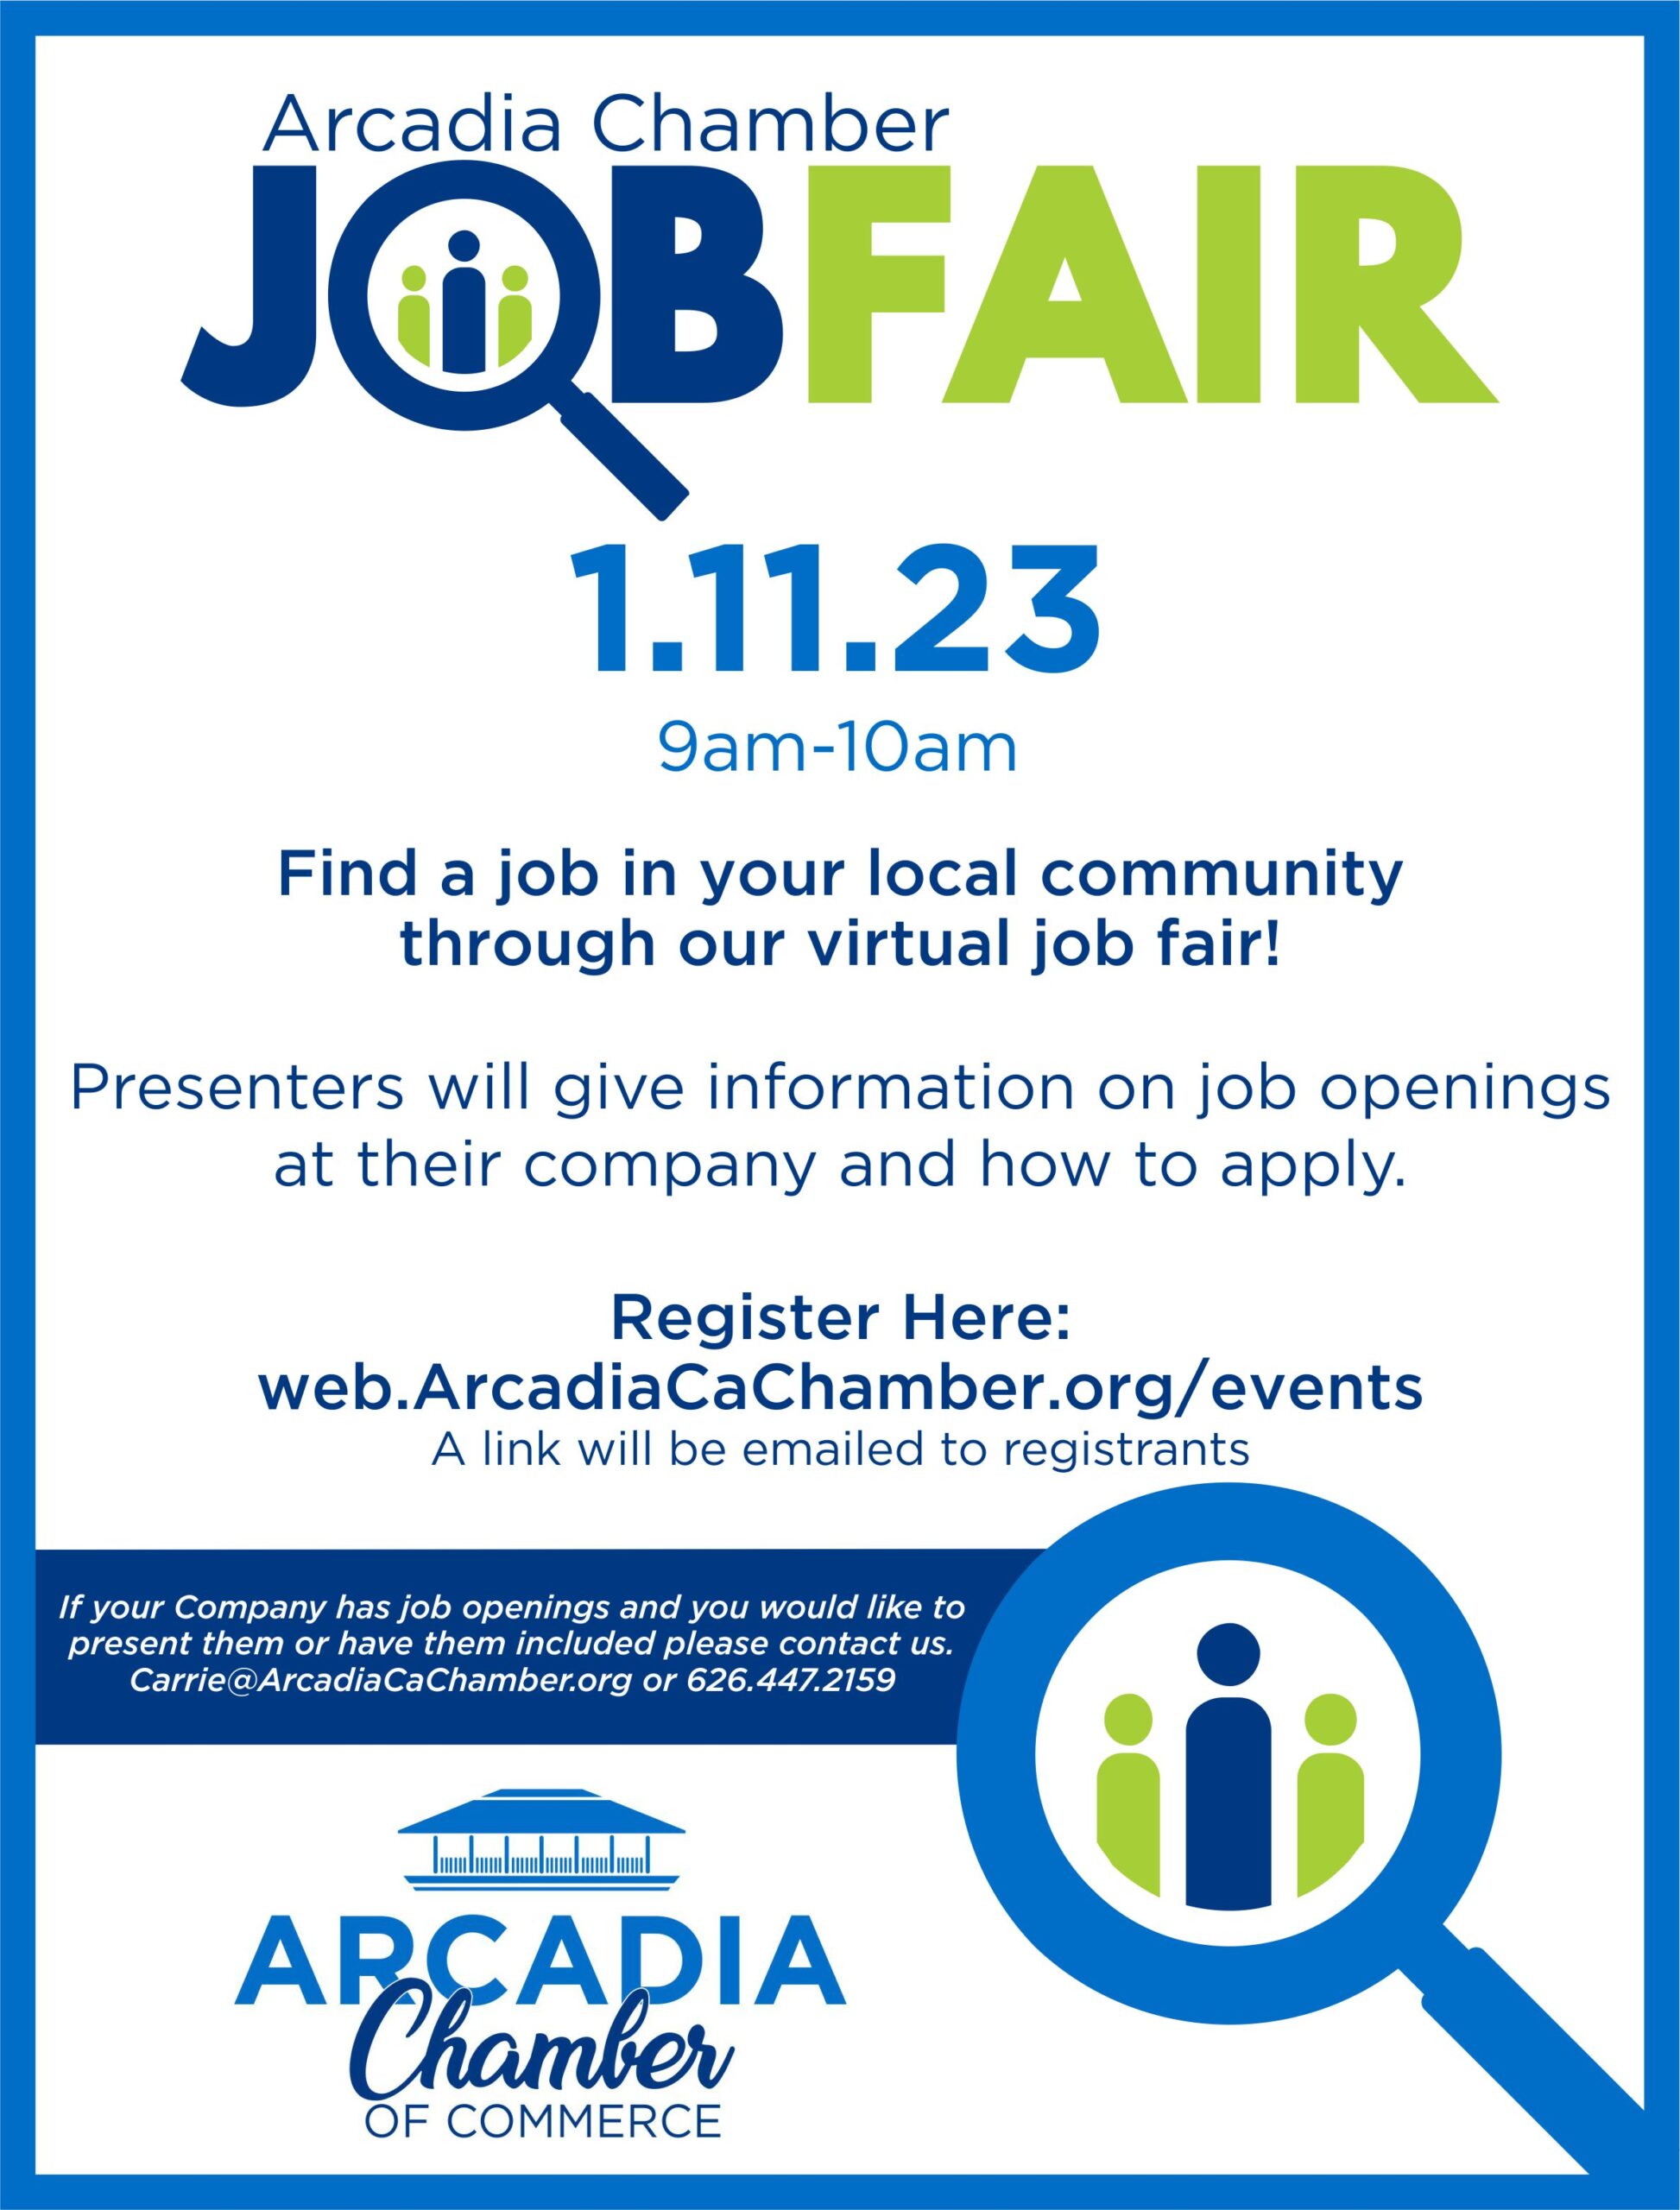 Job Fair flyer for January 11 in 2023